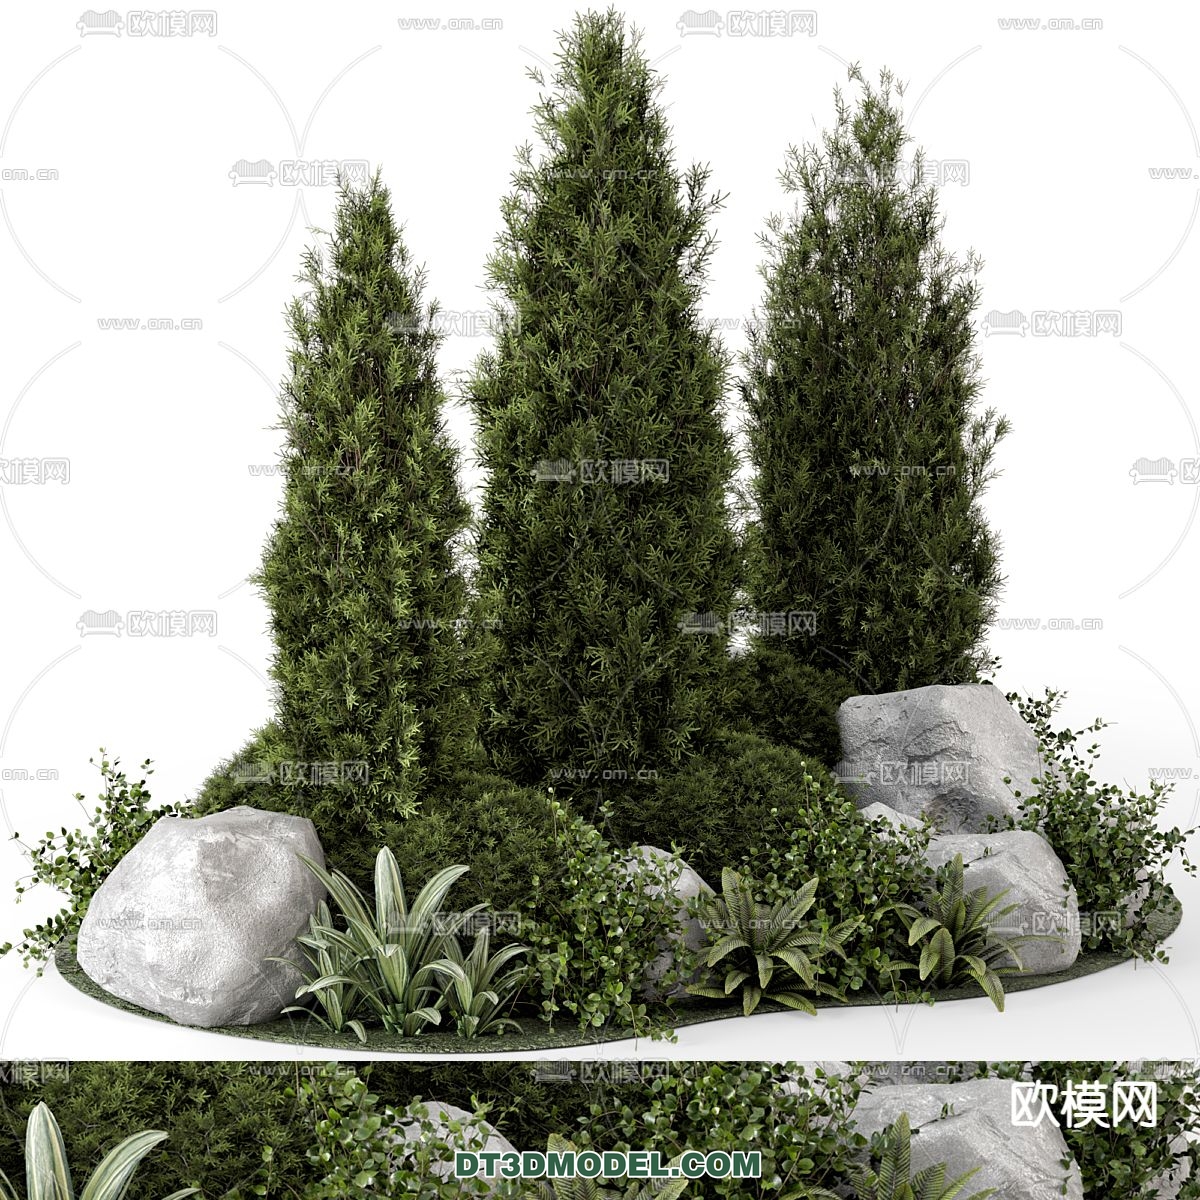 PLANTS – BUSH – VRAY / CORONA – 3D MODEL – 383 - thumbnail 1